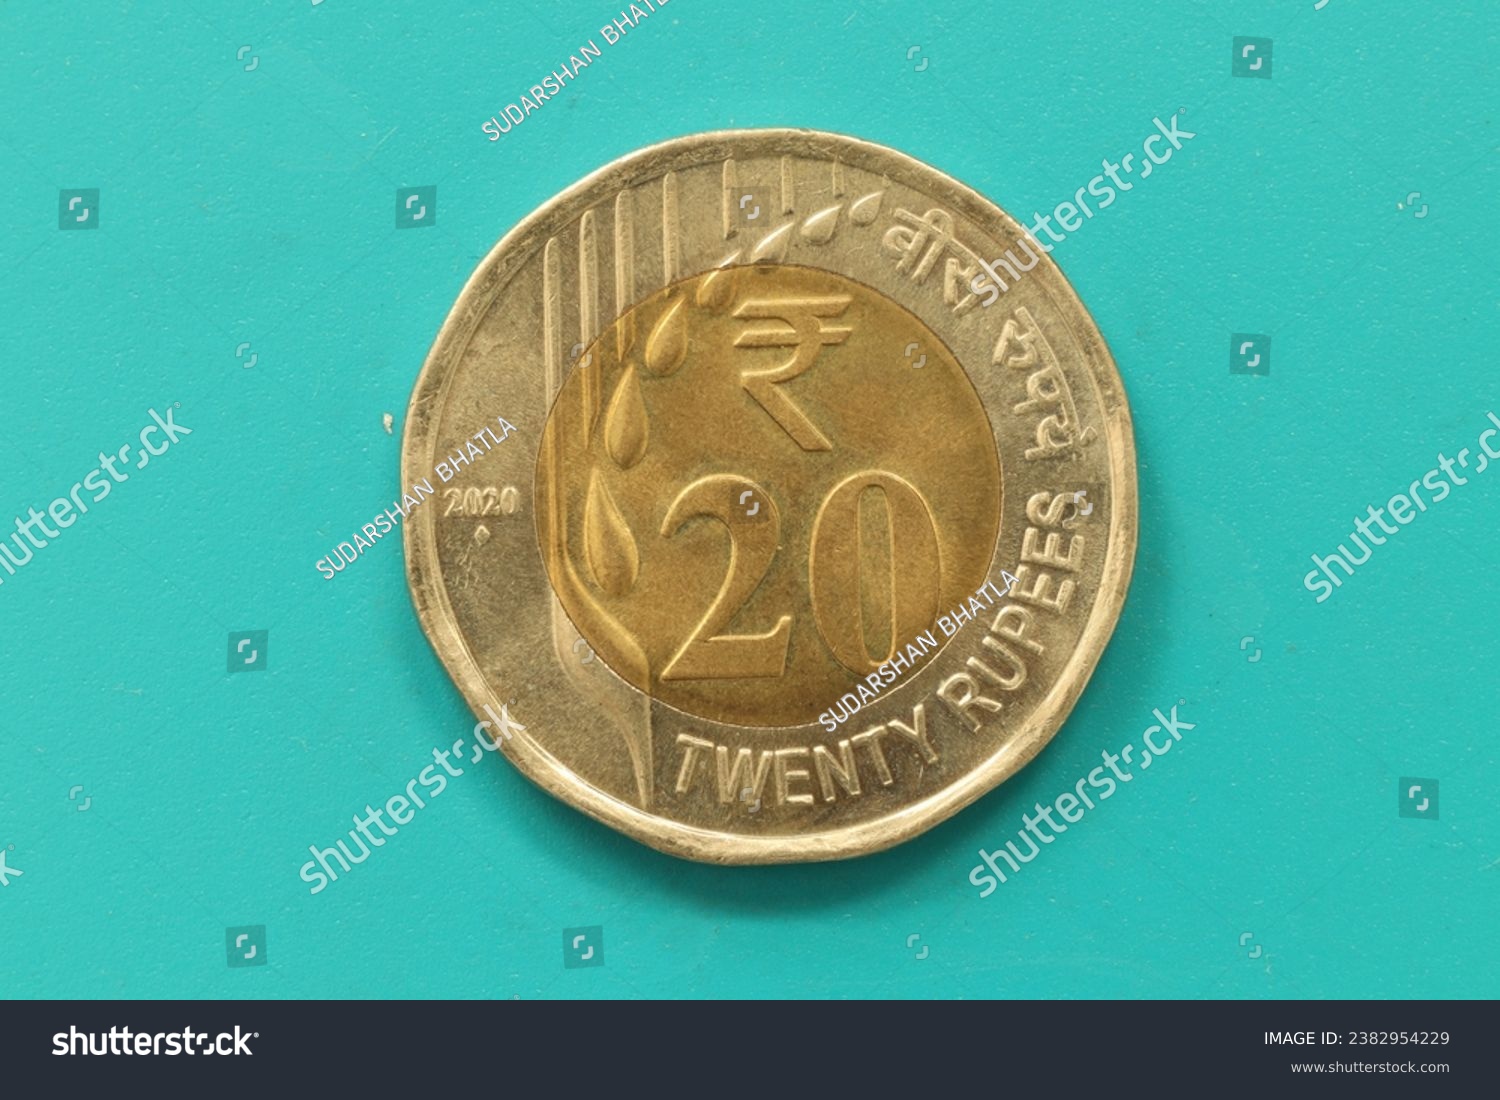 Closeup of a Rupee 20 coin of India. #2382954229